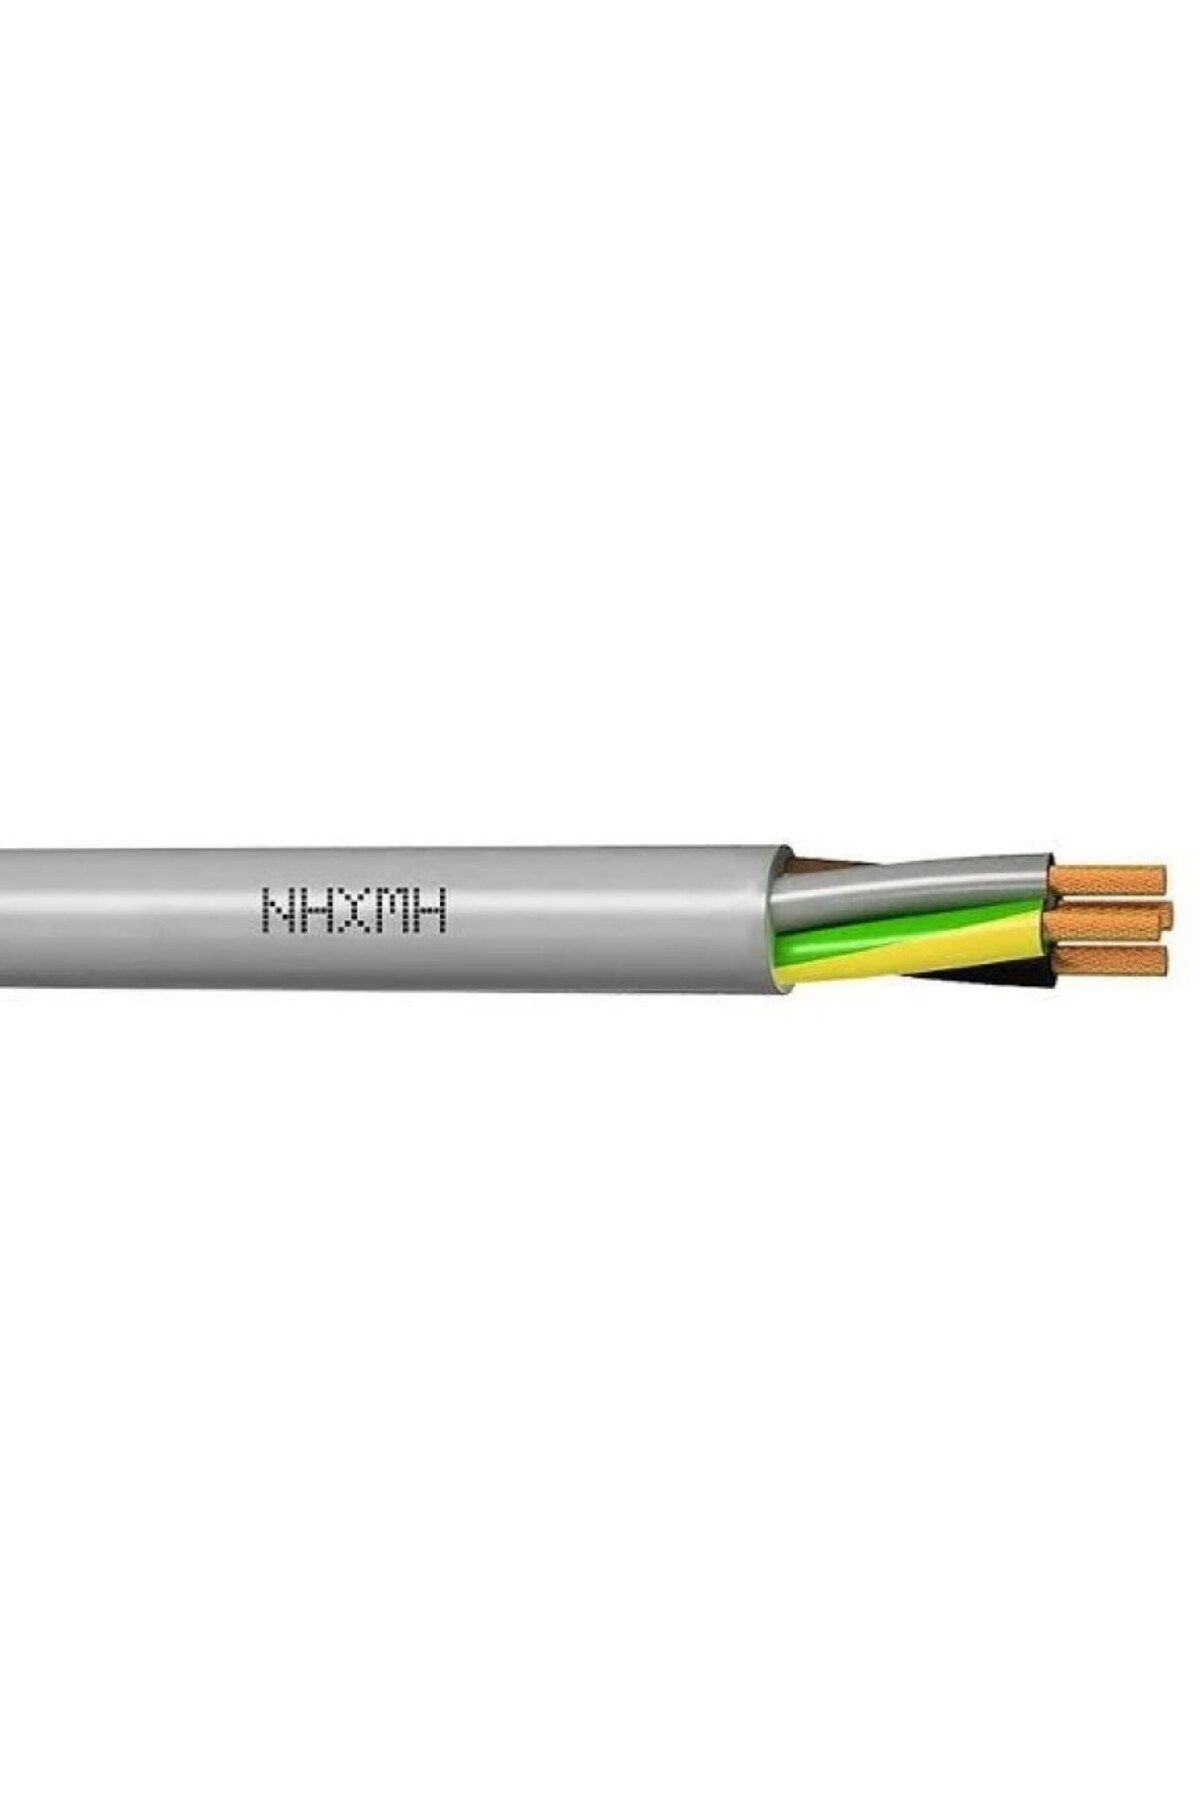 ÖZNUR 70 Metre 5x2.5 NHXMH Halogen Free Kablo Öznur Kablo